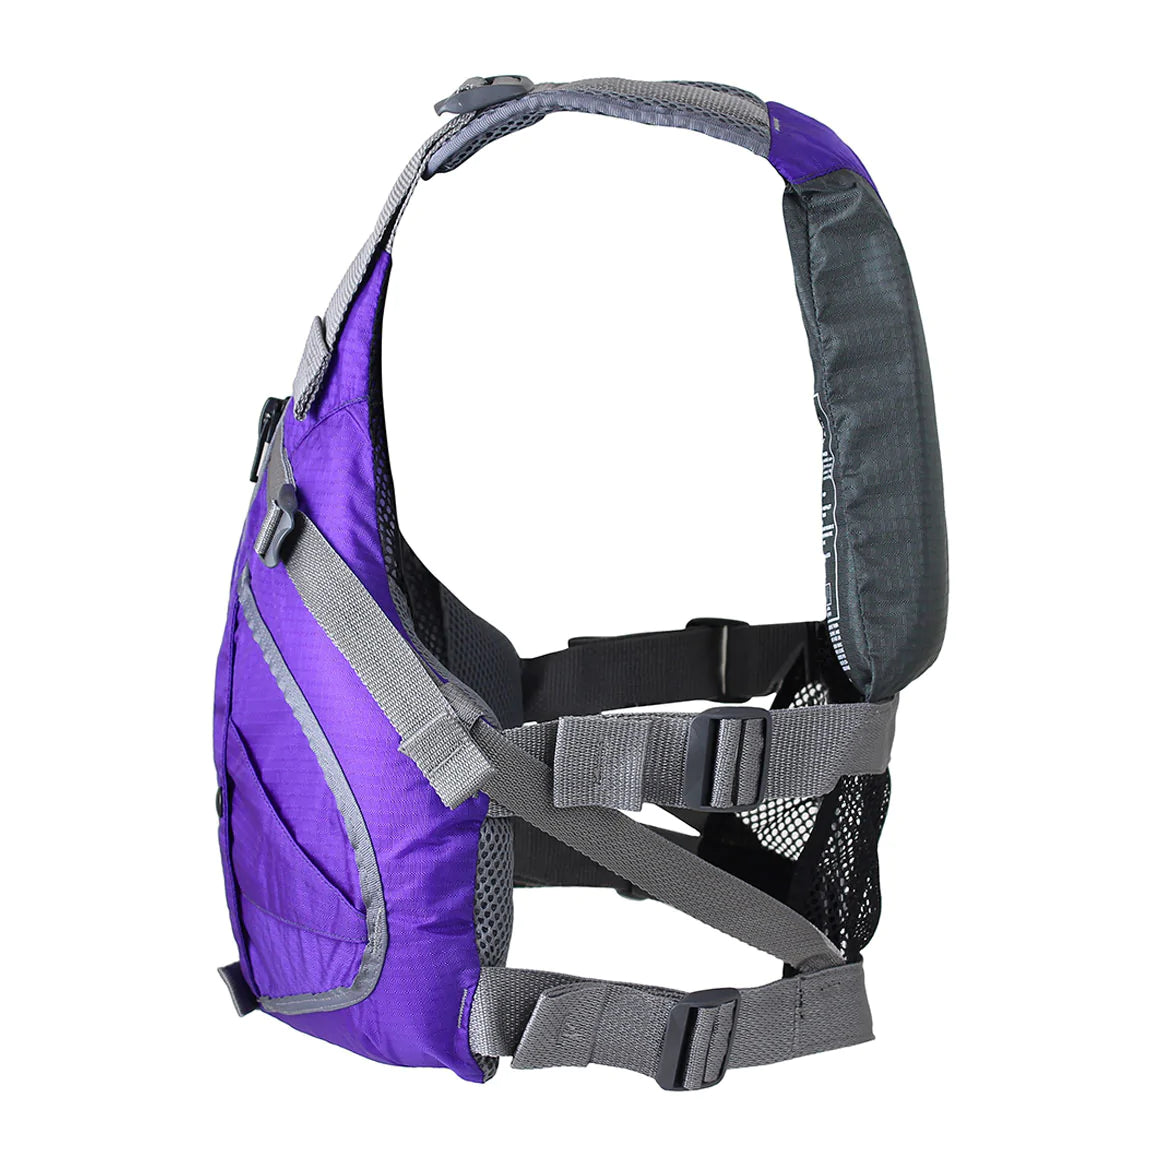 Flo Life Jacket (PFD)  Lifejacket for Women - Stohlquist WaterWare